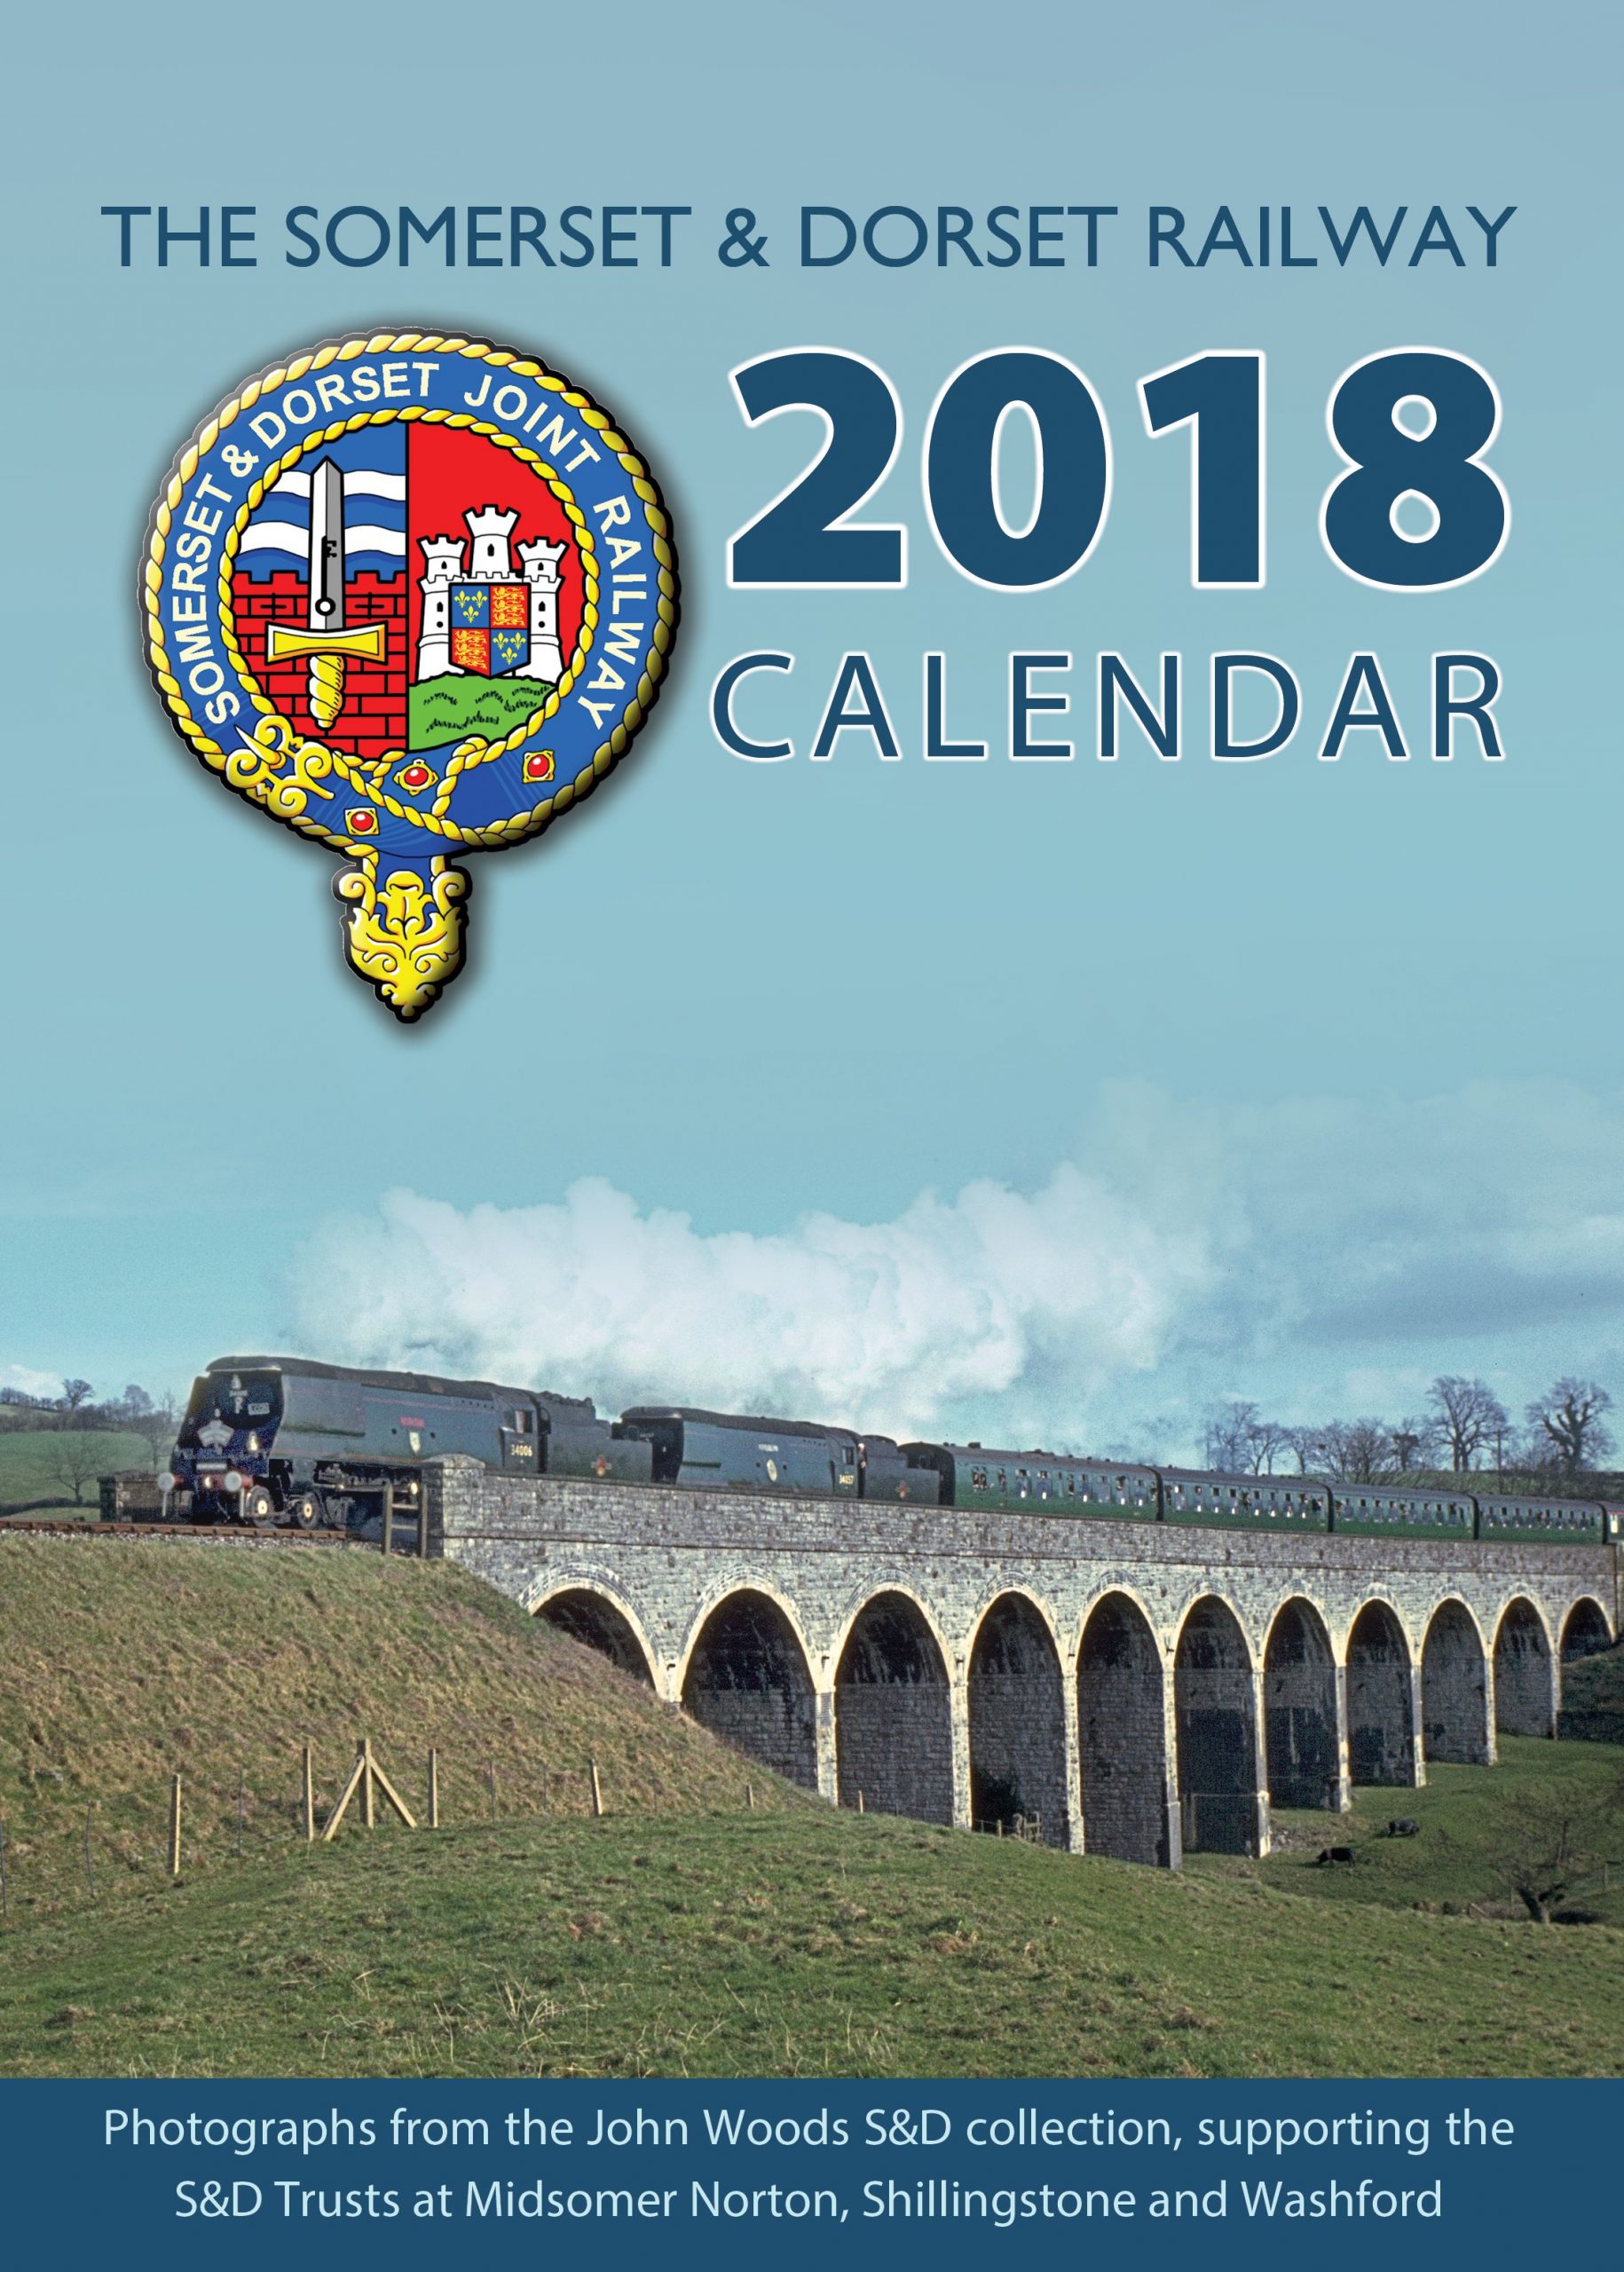 The S&DRT 2018 calendar